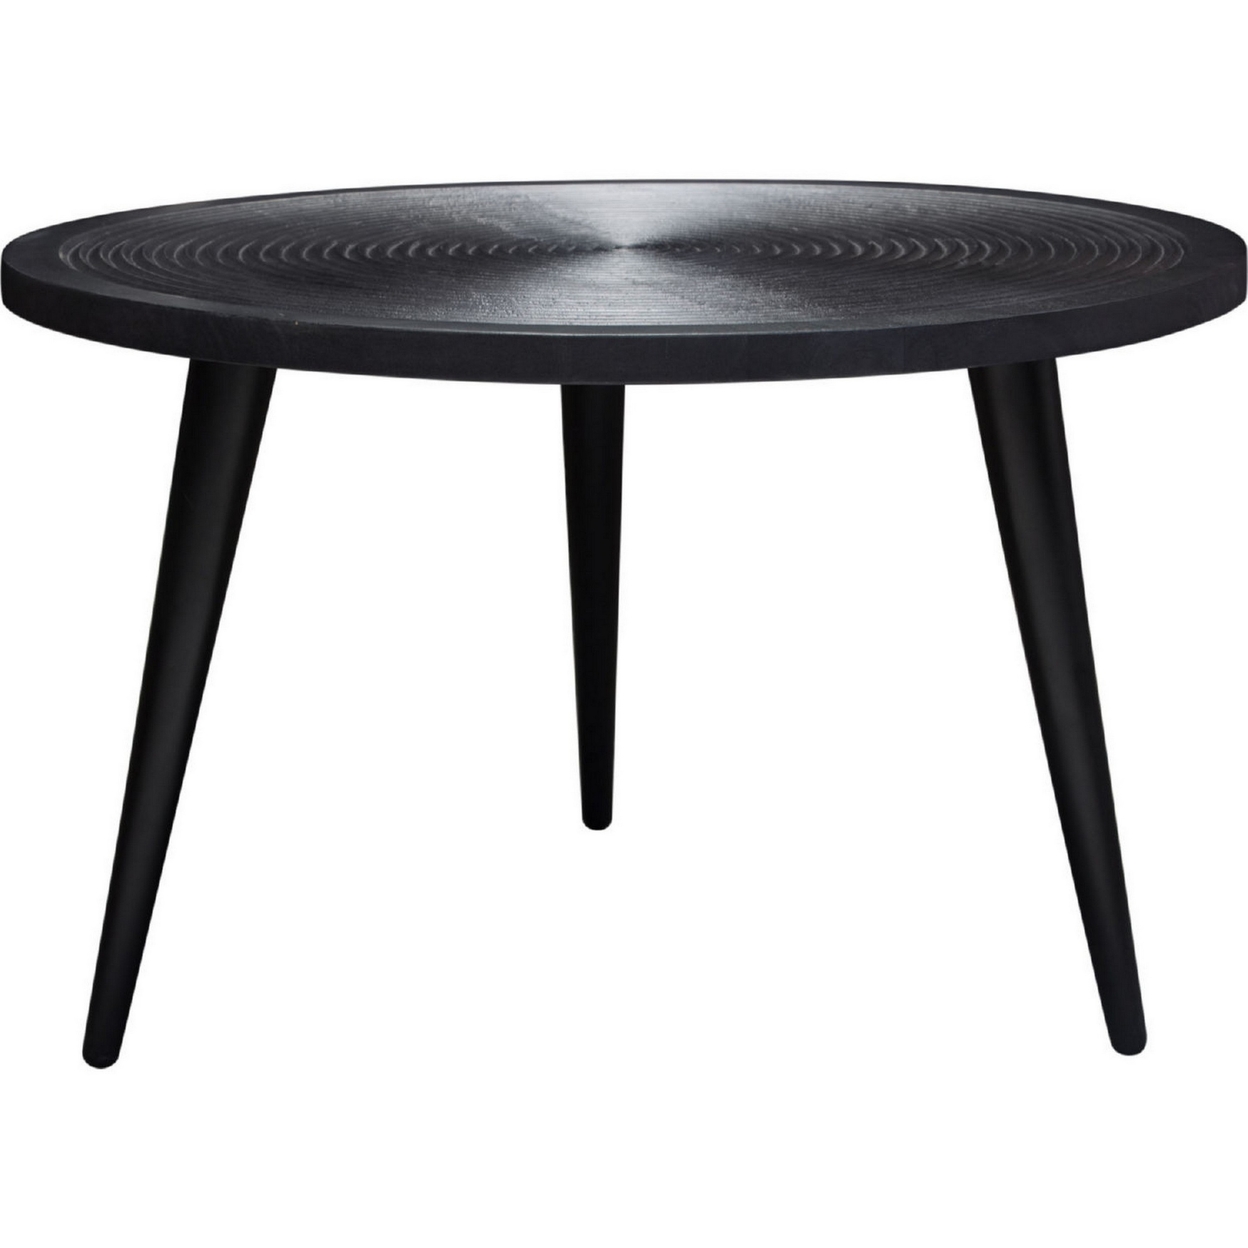 Vio 29 Inch Round Coffee Table, Embossed Surface Patterning, Black Wood- Saltoro Sherpi